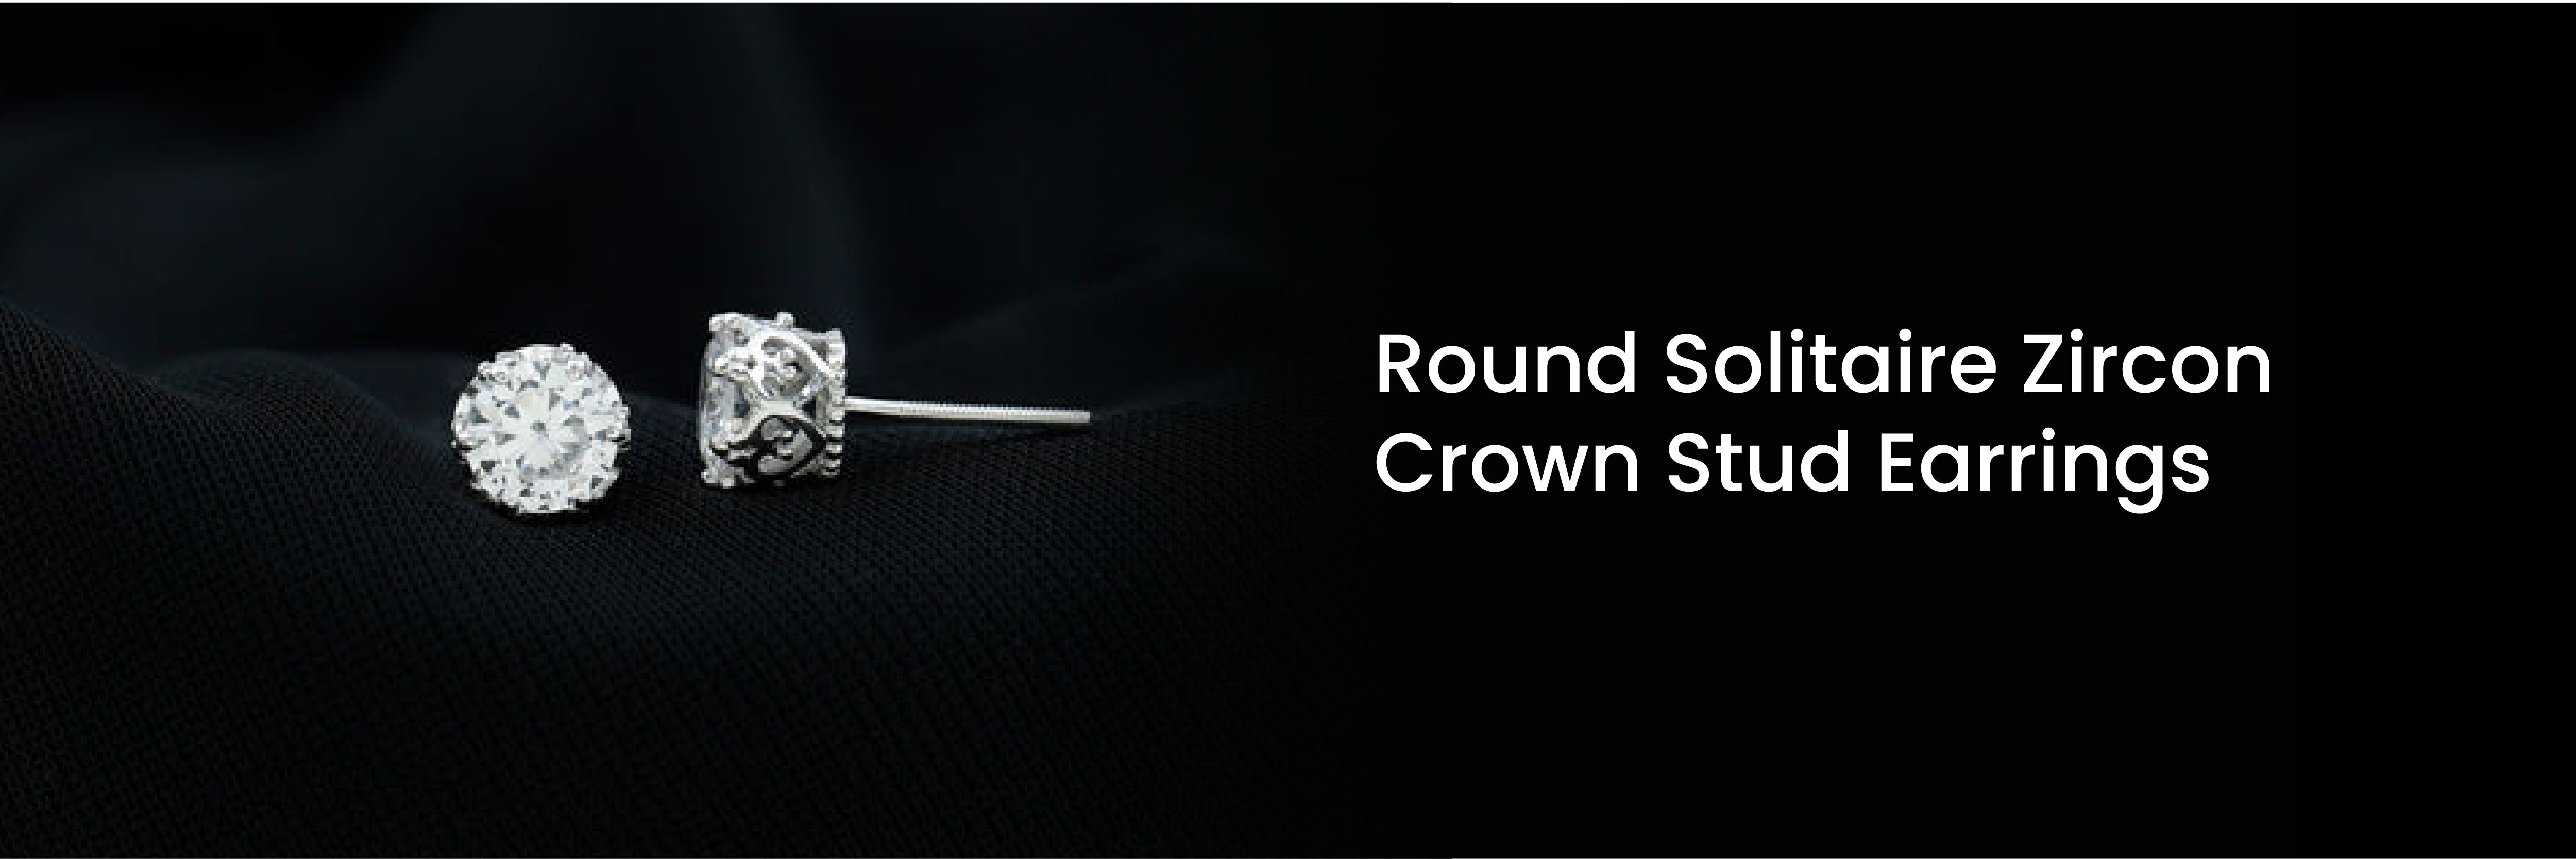 Round Solitaire Zircon Crown Stud Earrings